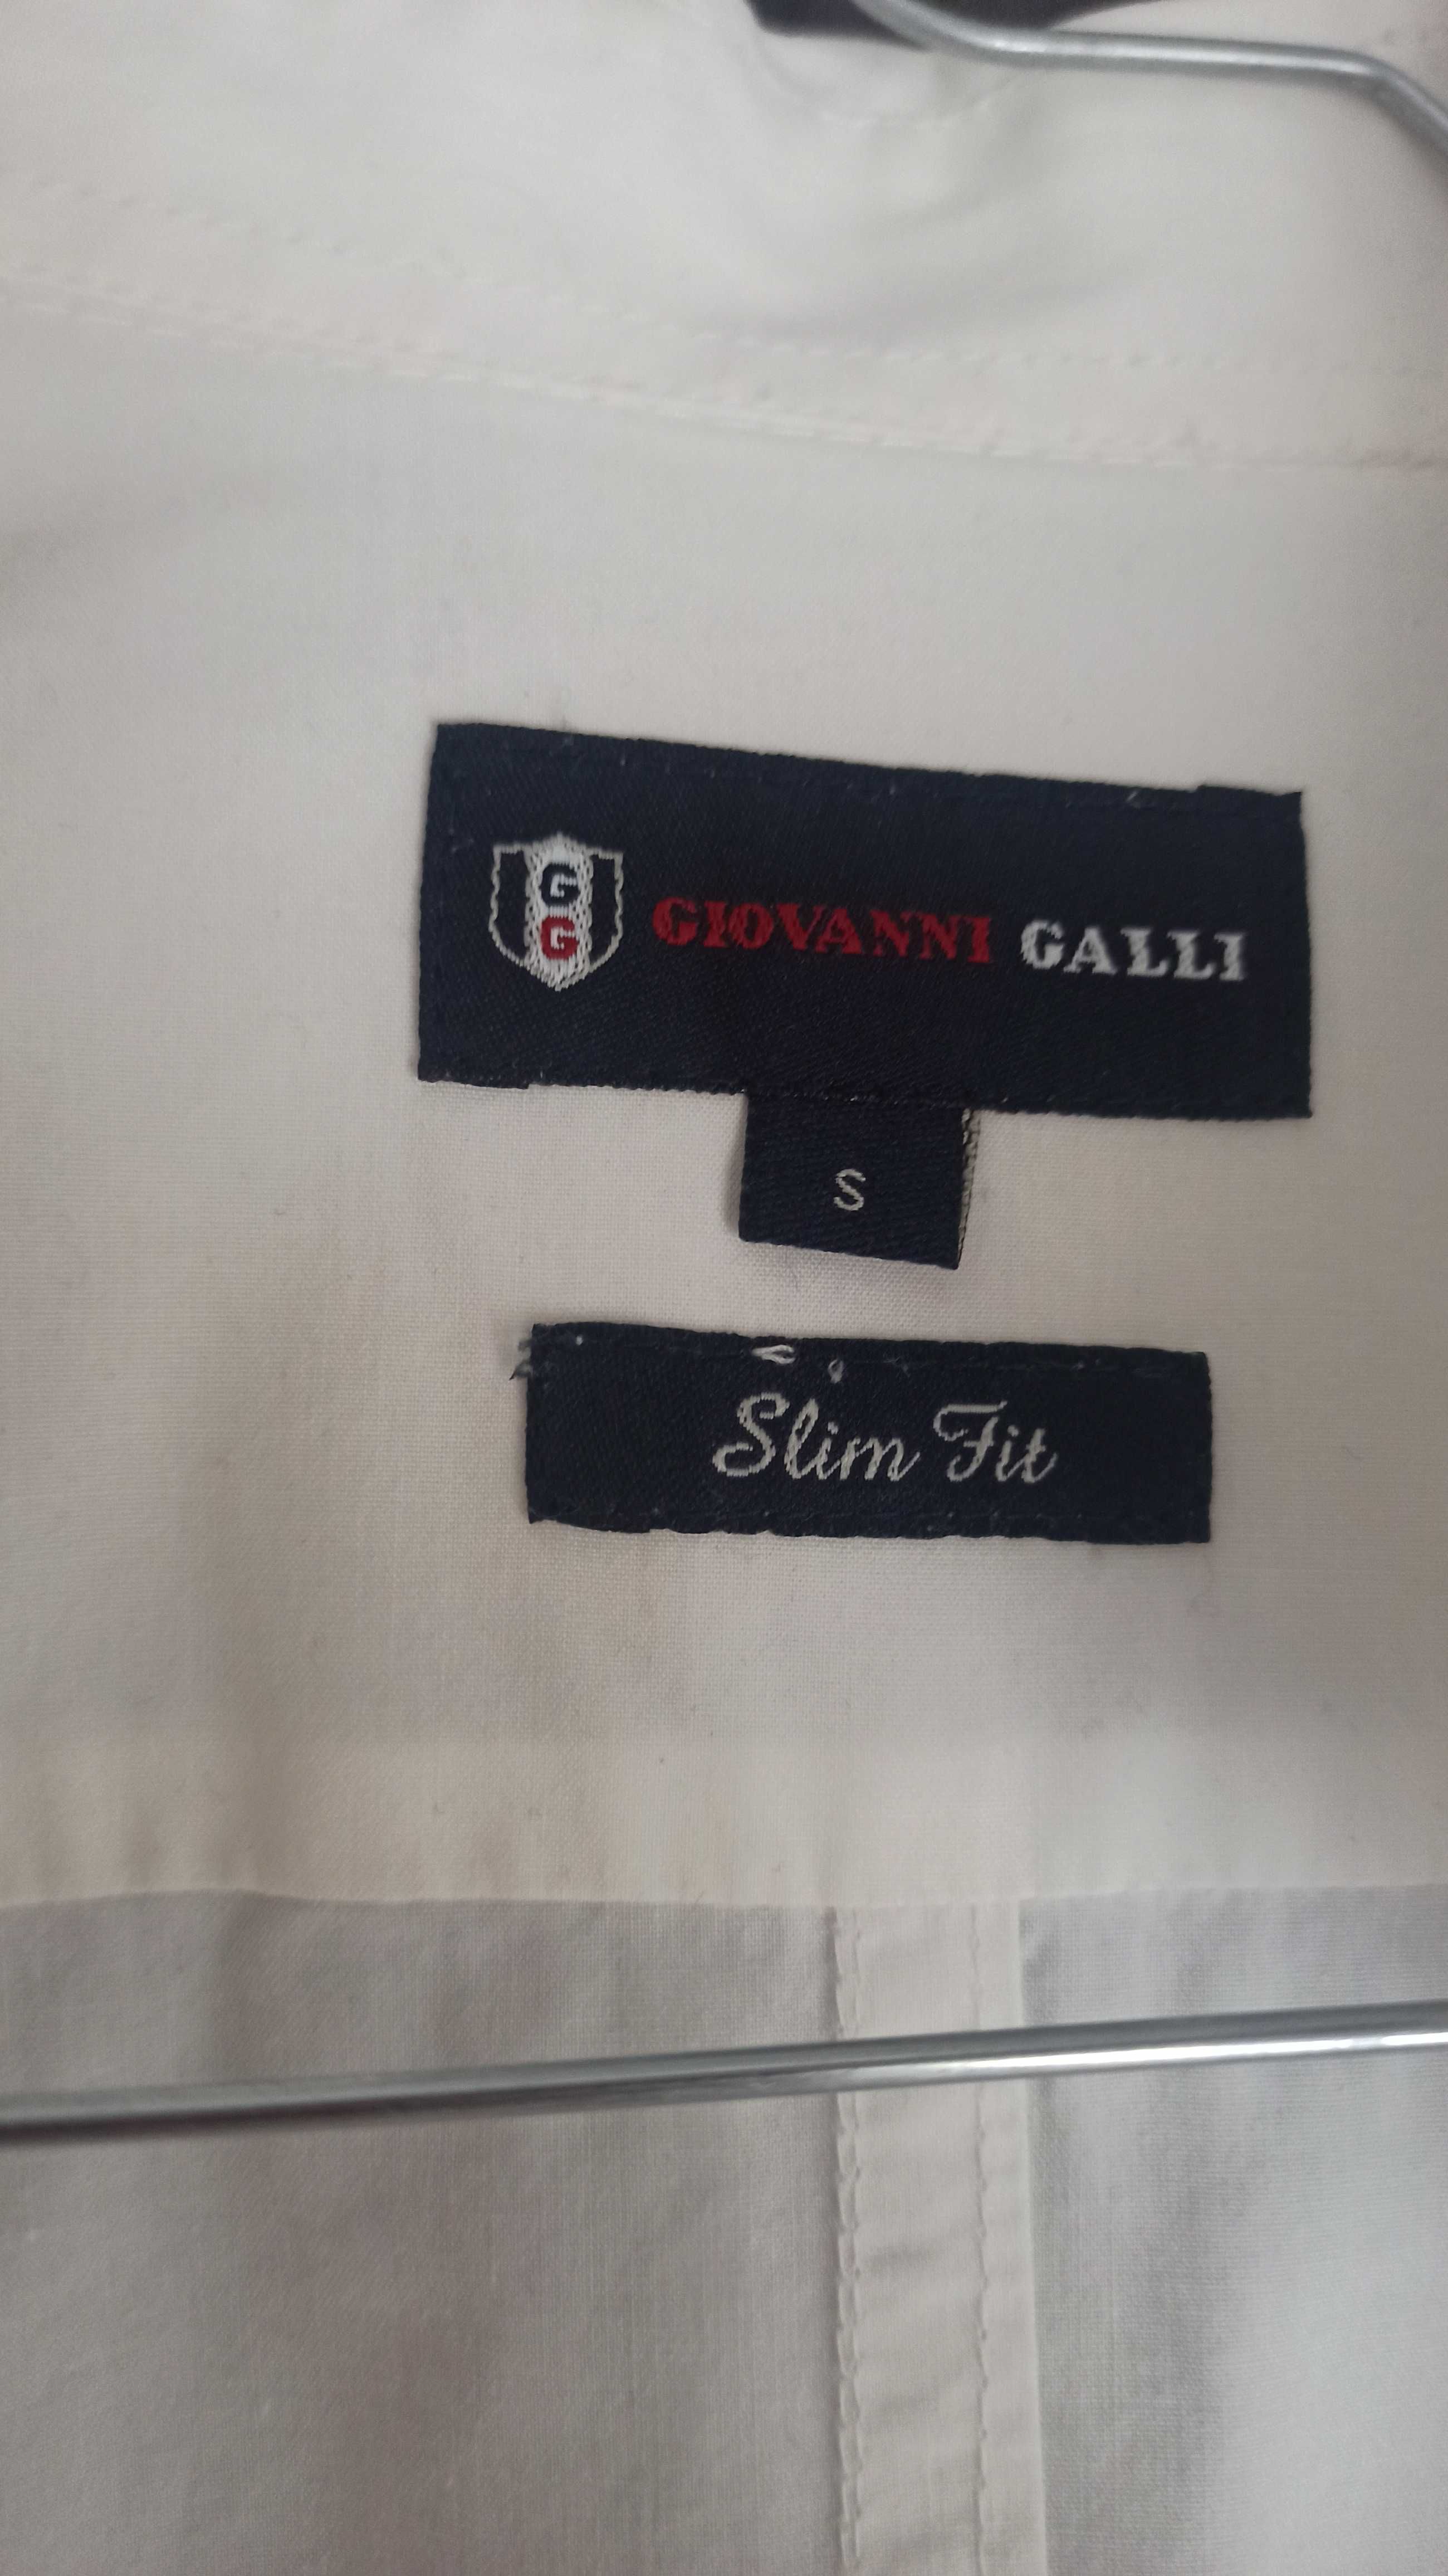 Camisa lisa da Giovanni Galli